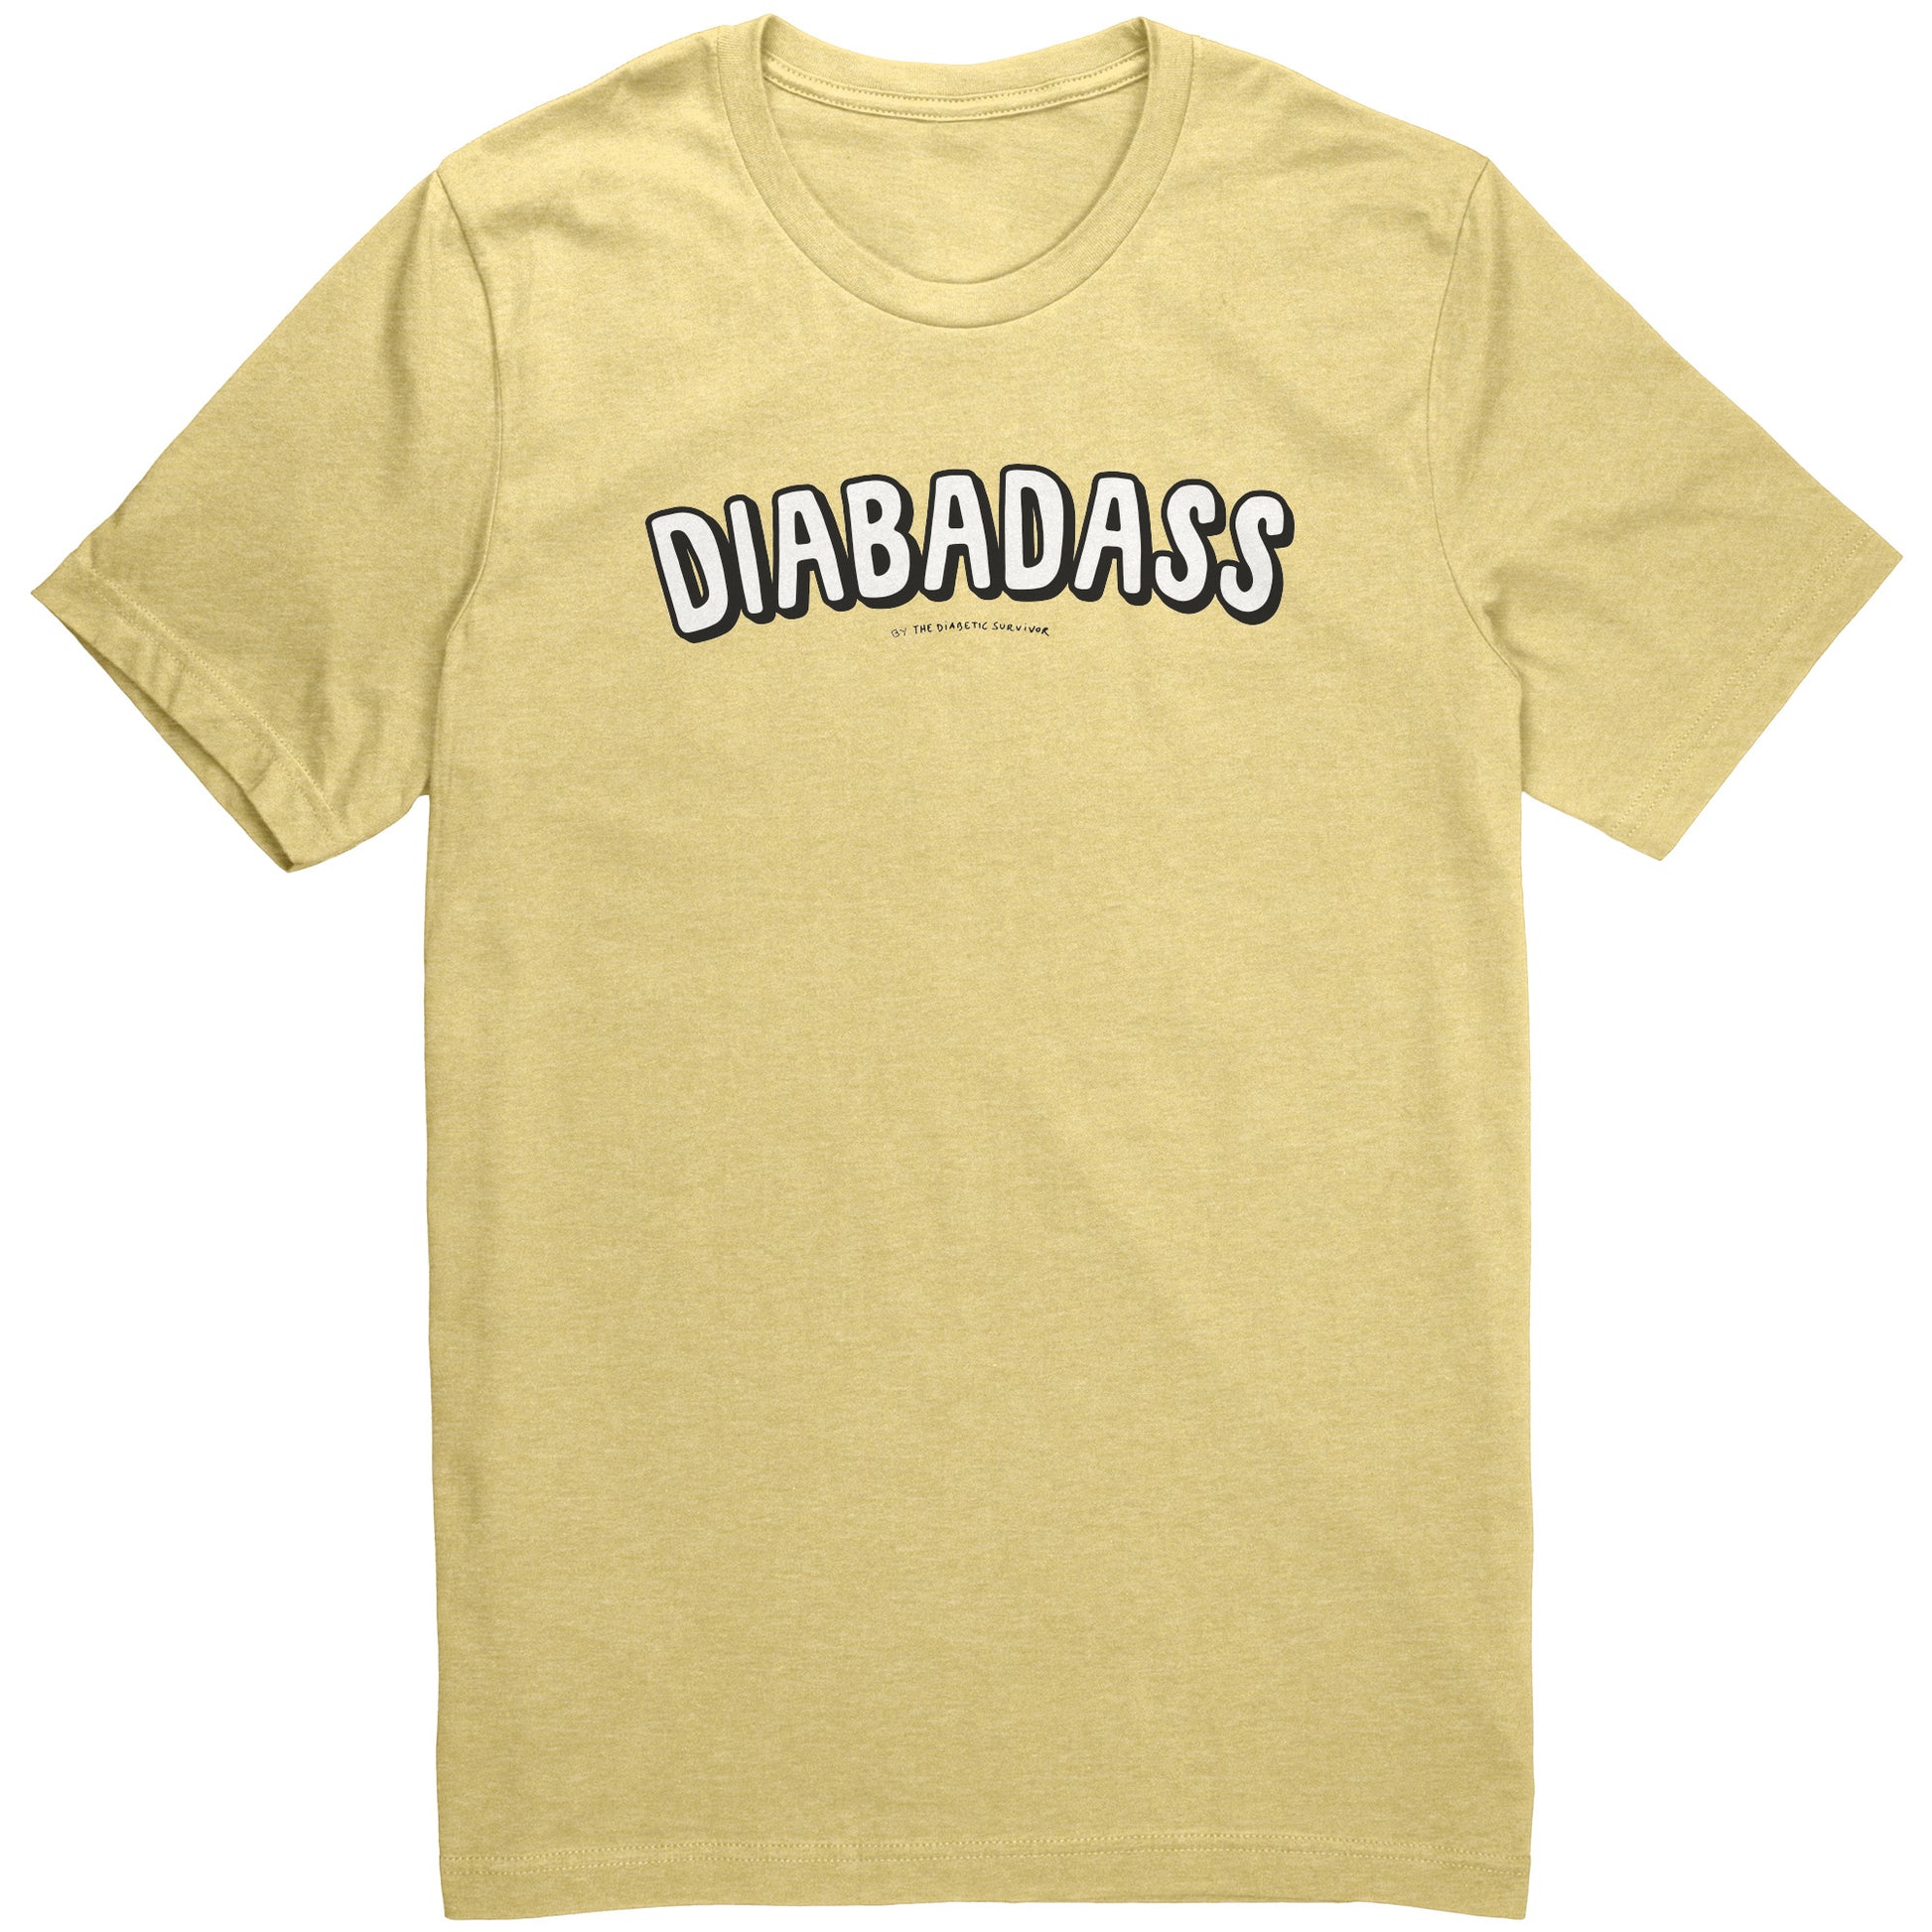 diabadass yellow unisex t-shirt for the diabetes community